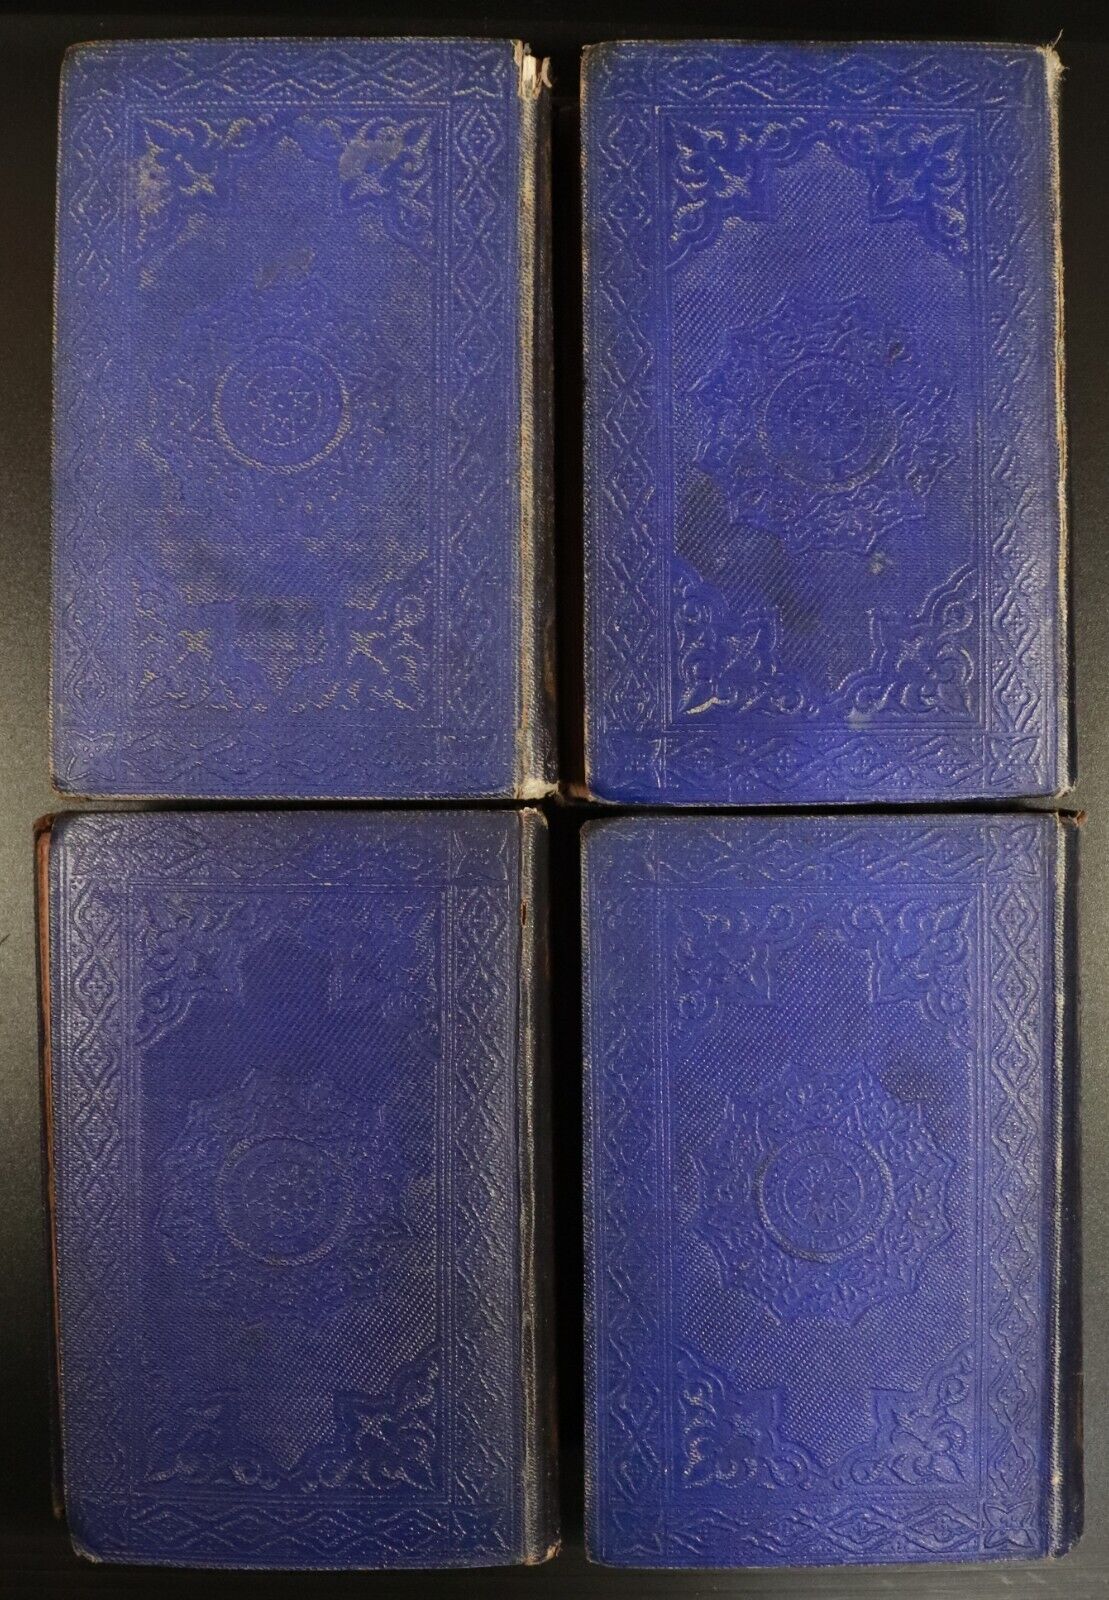 1858 4vol Diary & Correspondence Of Samuel Pepys Antiquarian History Book Set